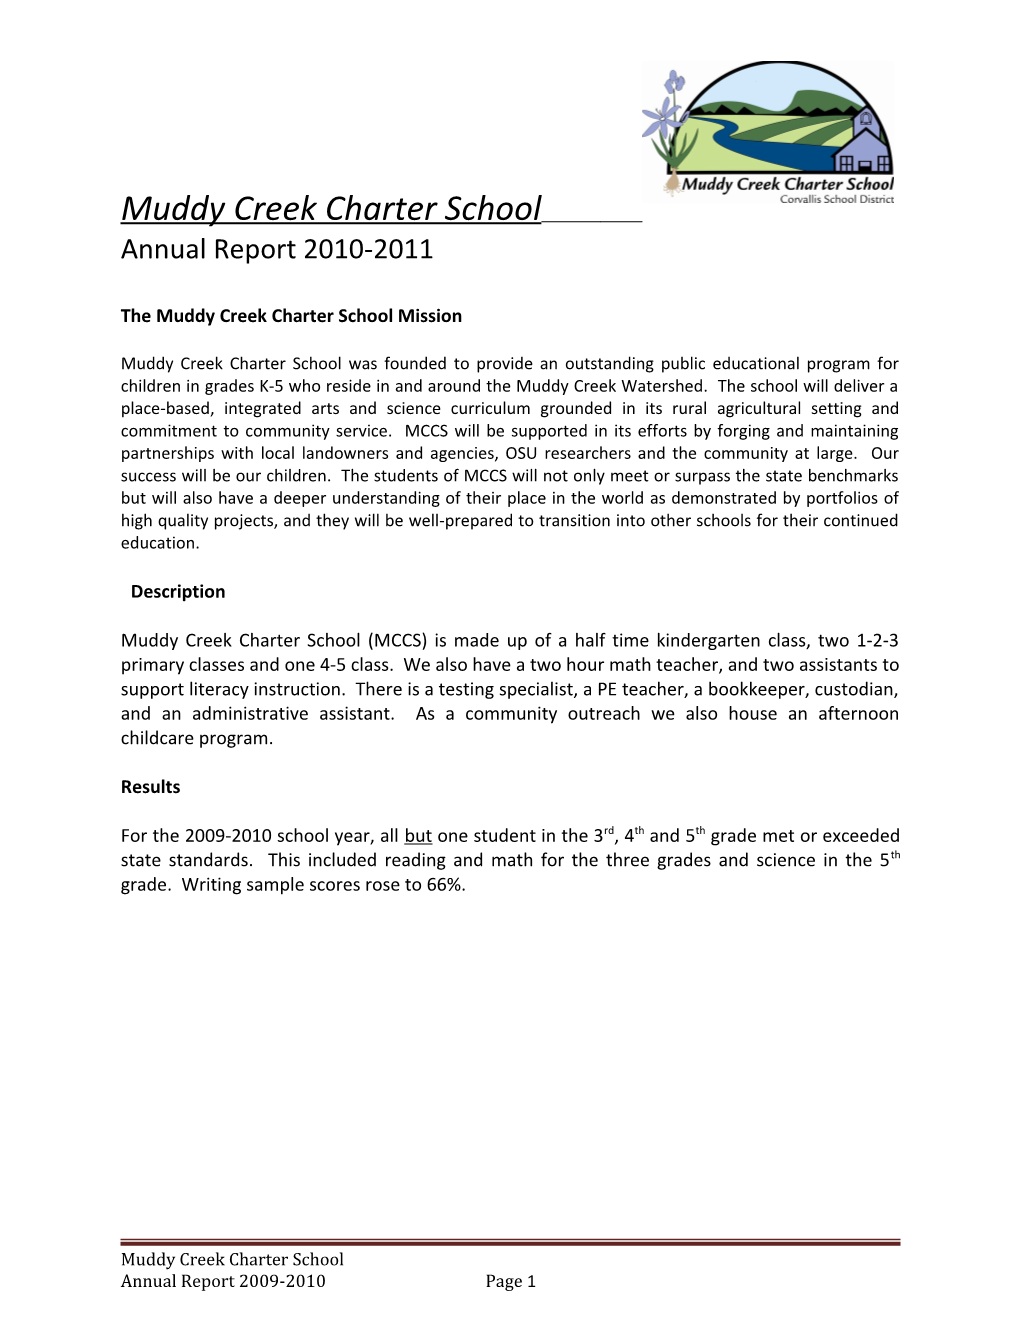 The Muddy Creek Charter School Mission